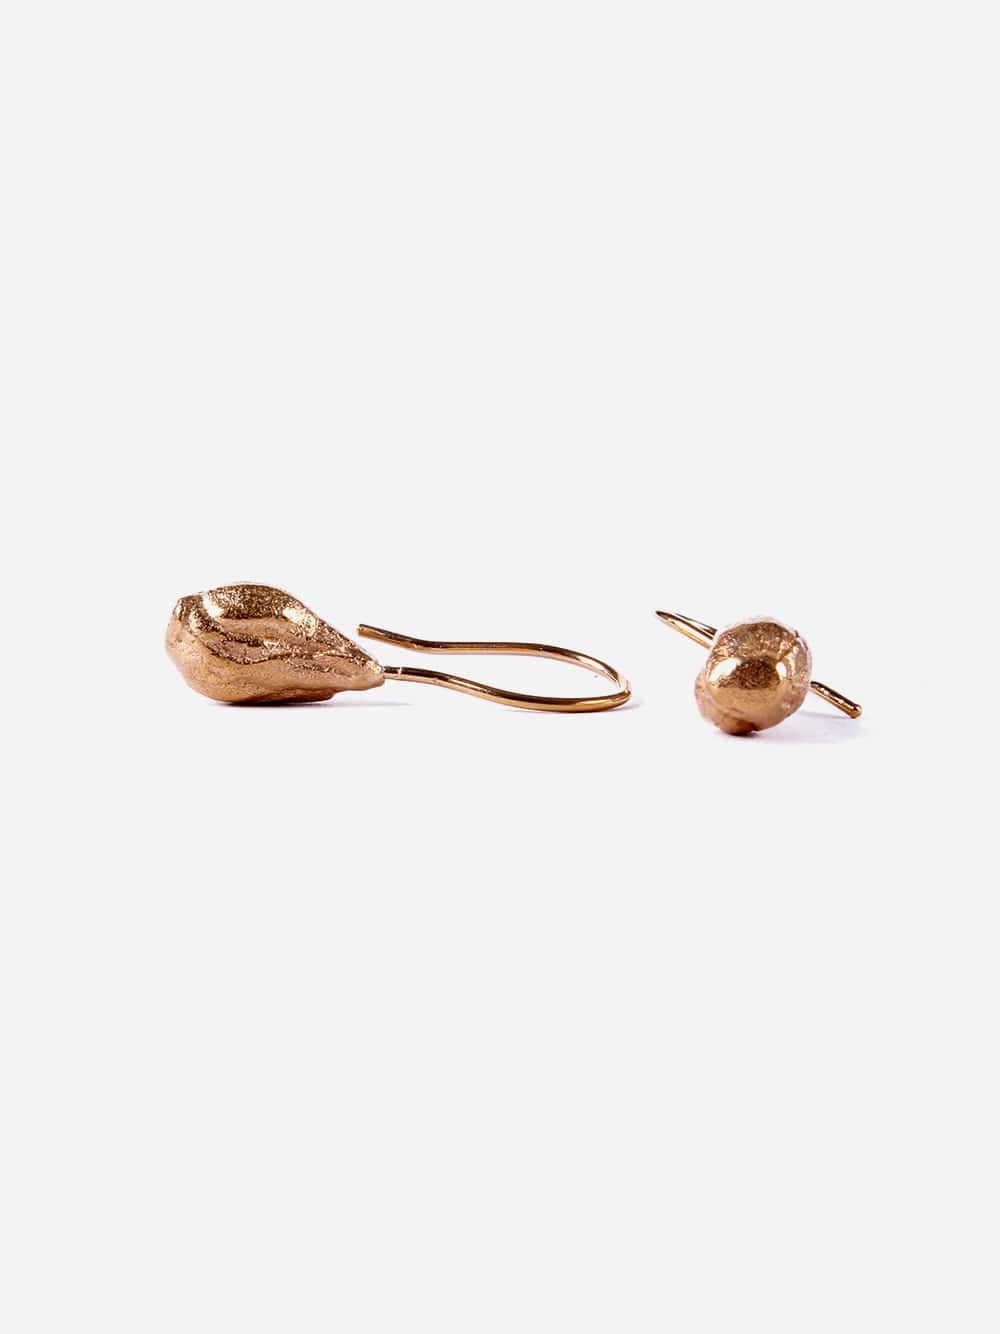 Golden Earrings Seeds | Bellisgirl 